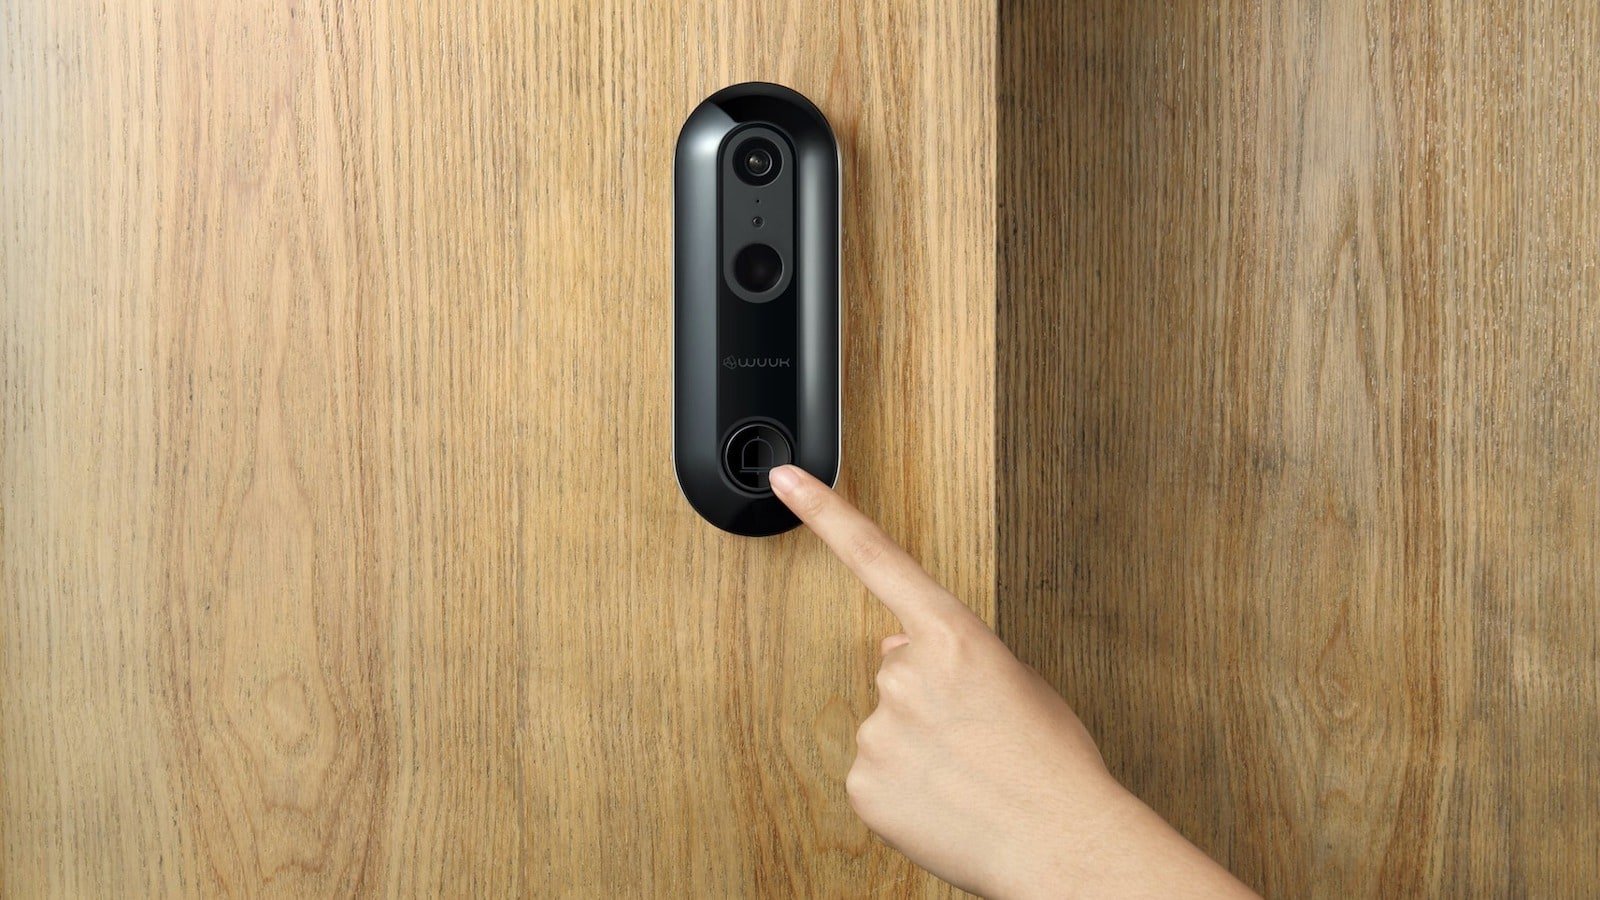 WUUK Smart Antitheft Doorbell has AI facial recognition and a voice gender modifier